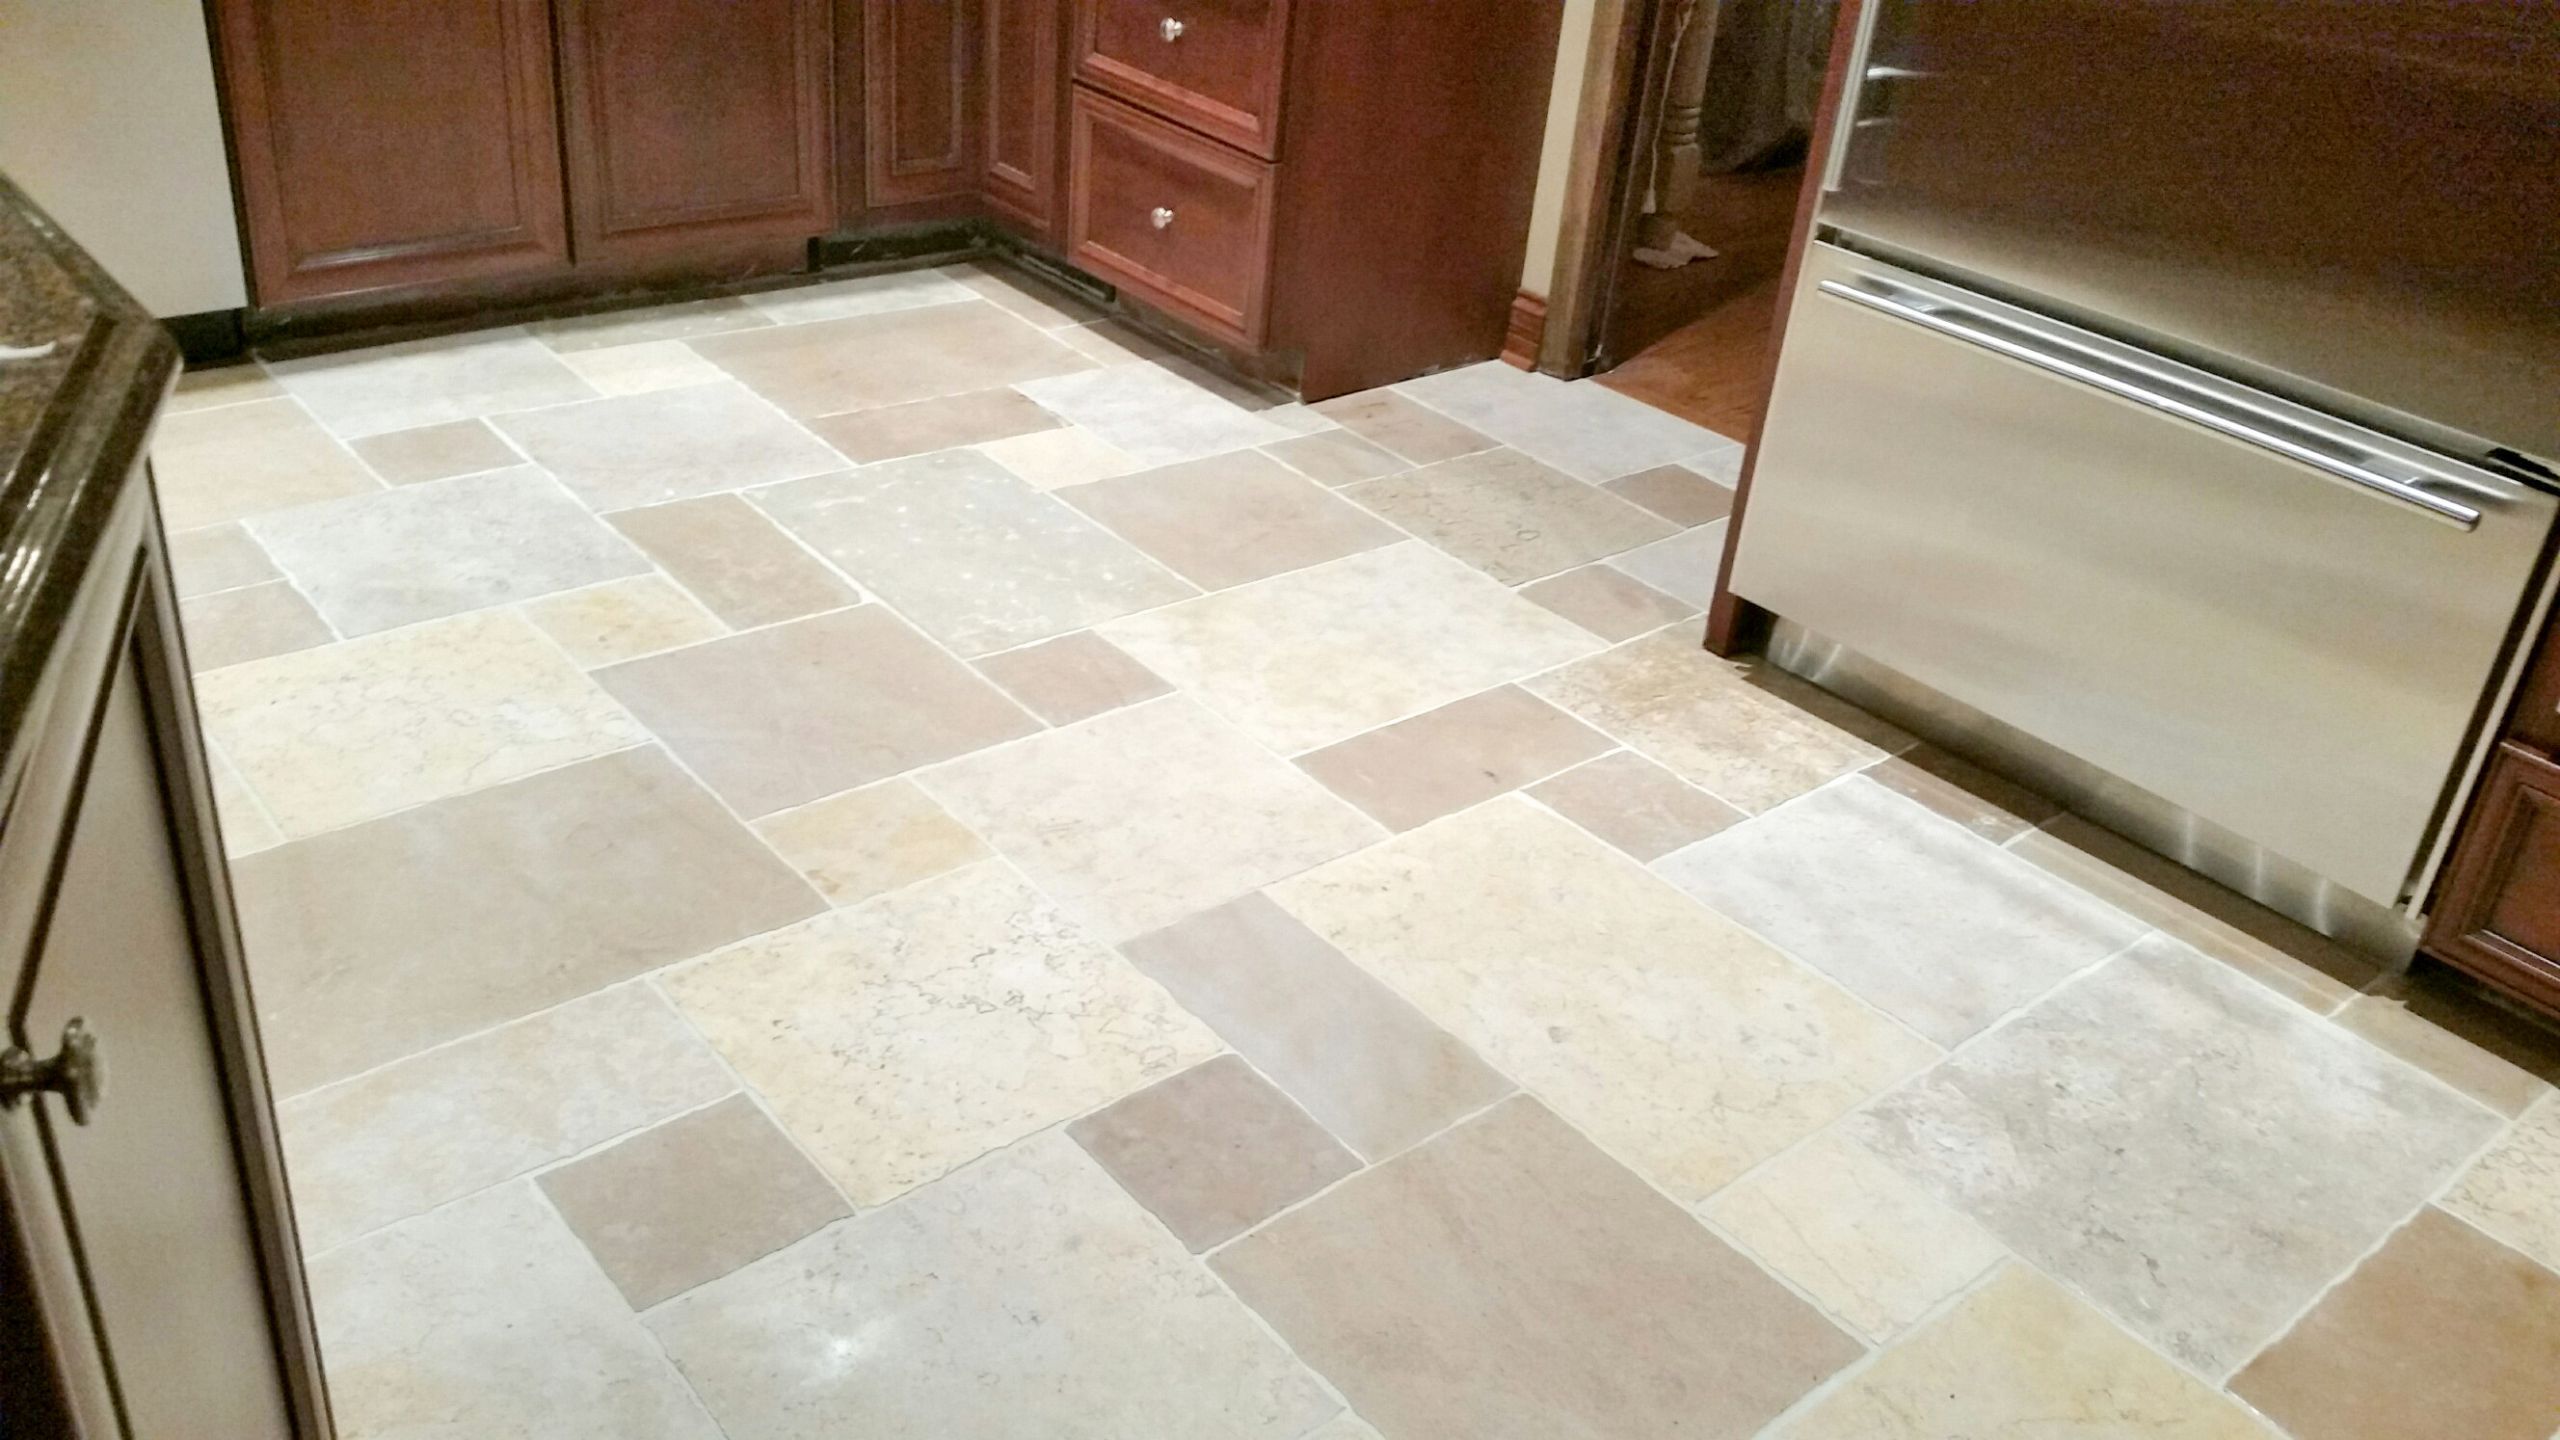 Porcelain Tiles Kitchen Floor
 Why Choose Ceramic Tile for Your Floor